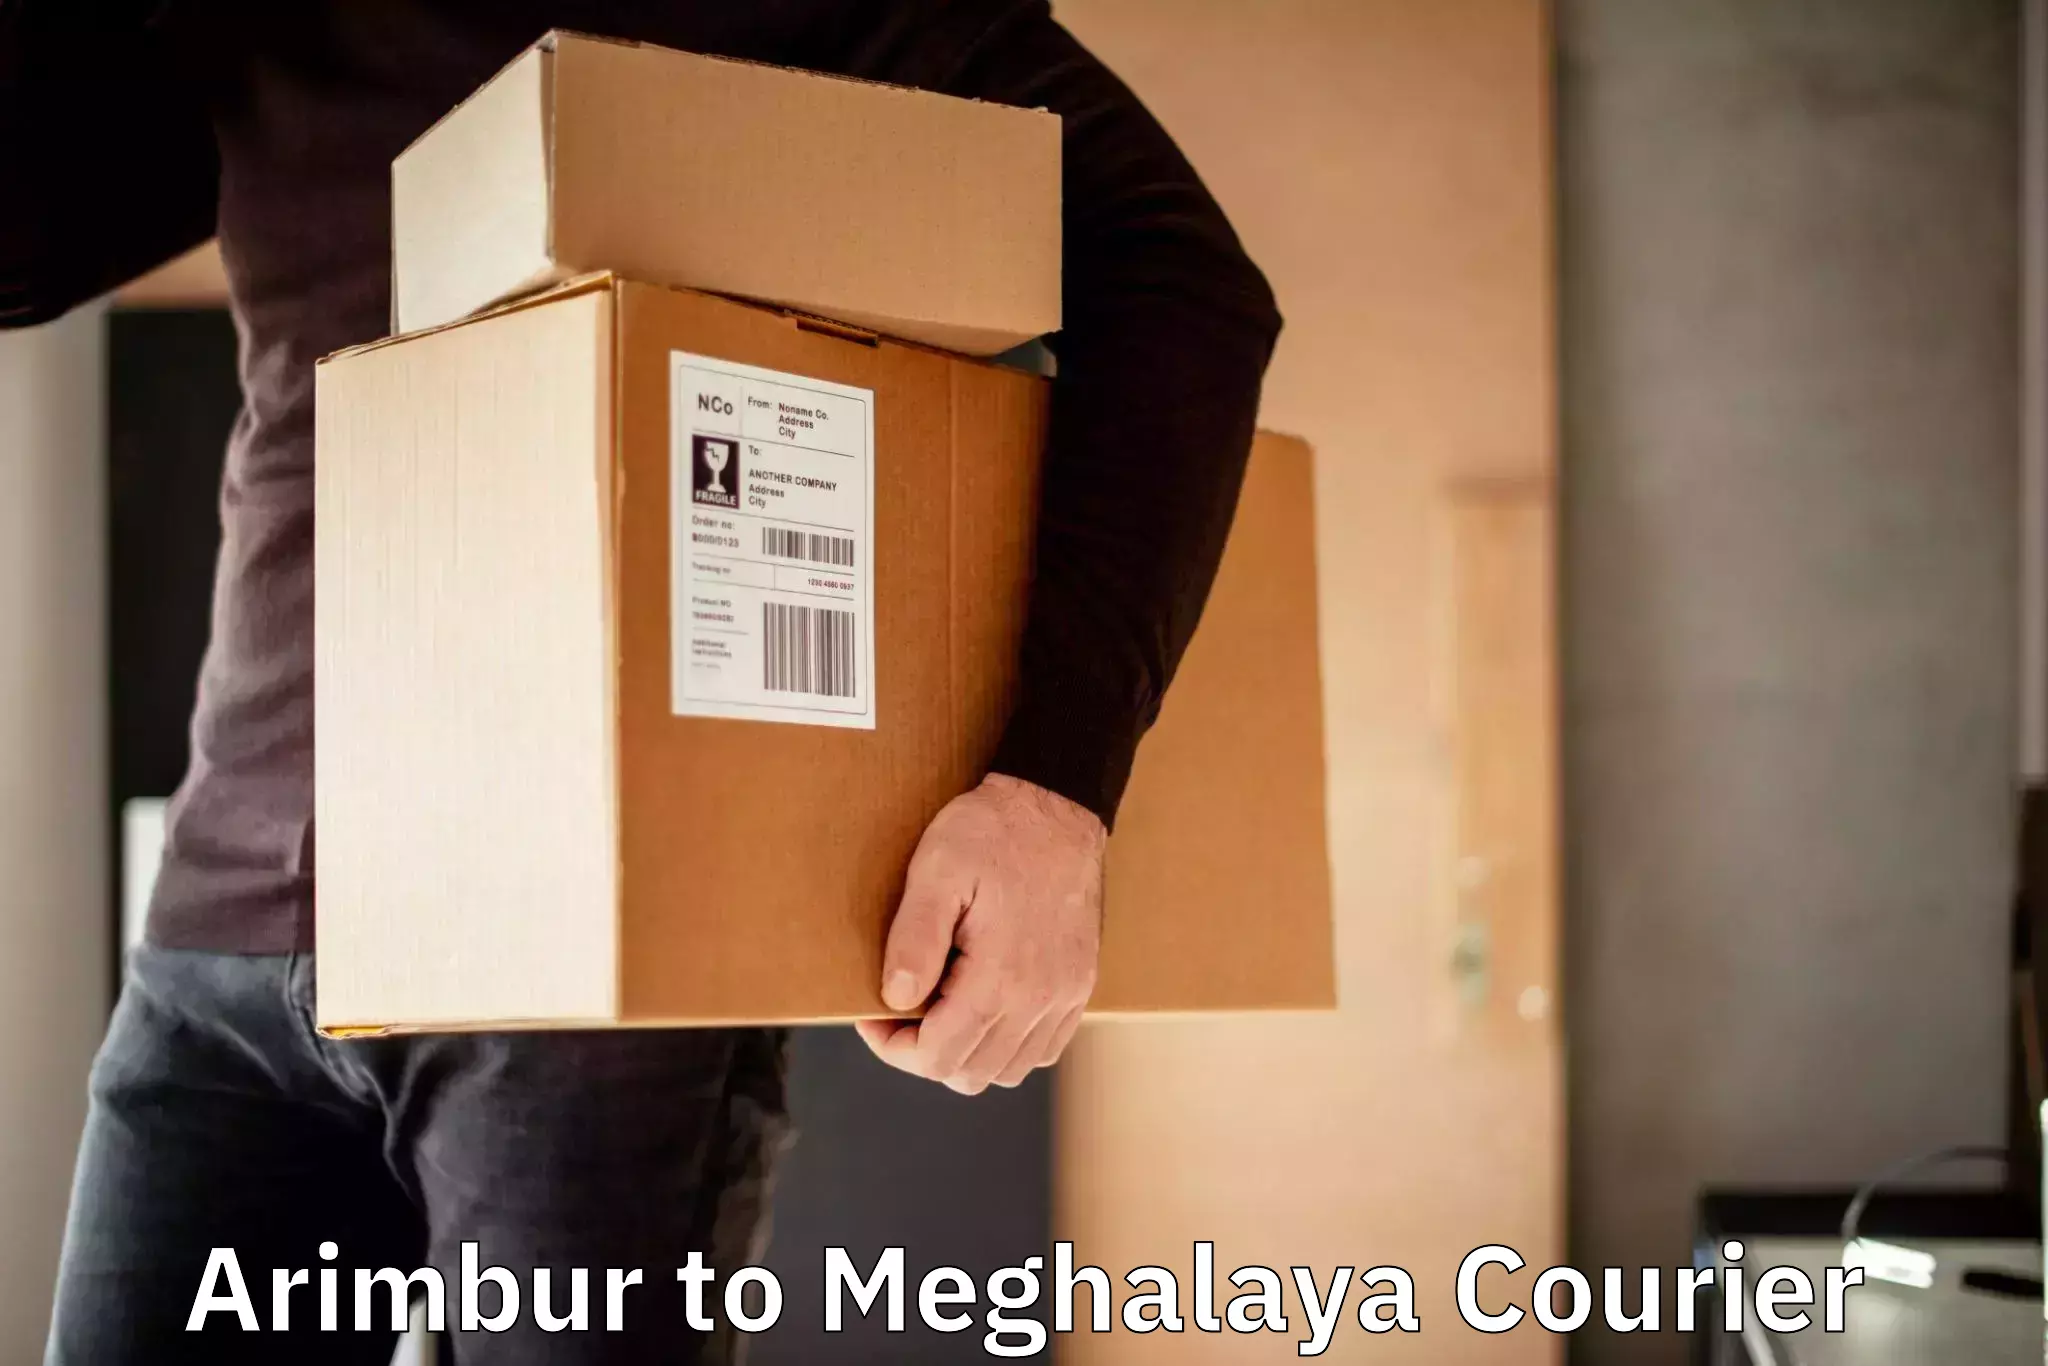 Courier service comparison Arimbur to Meghalaya